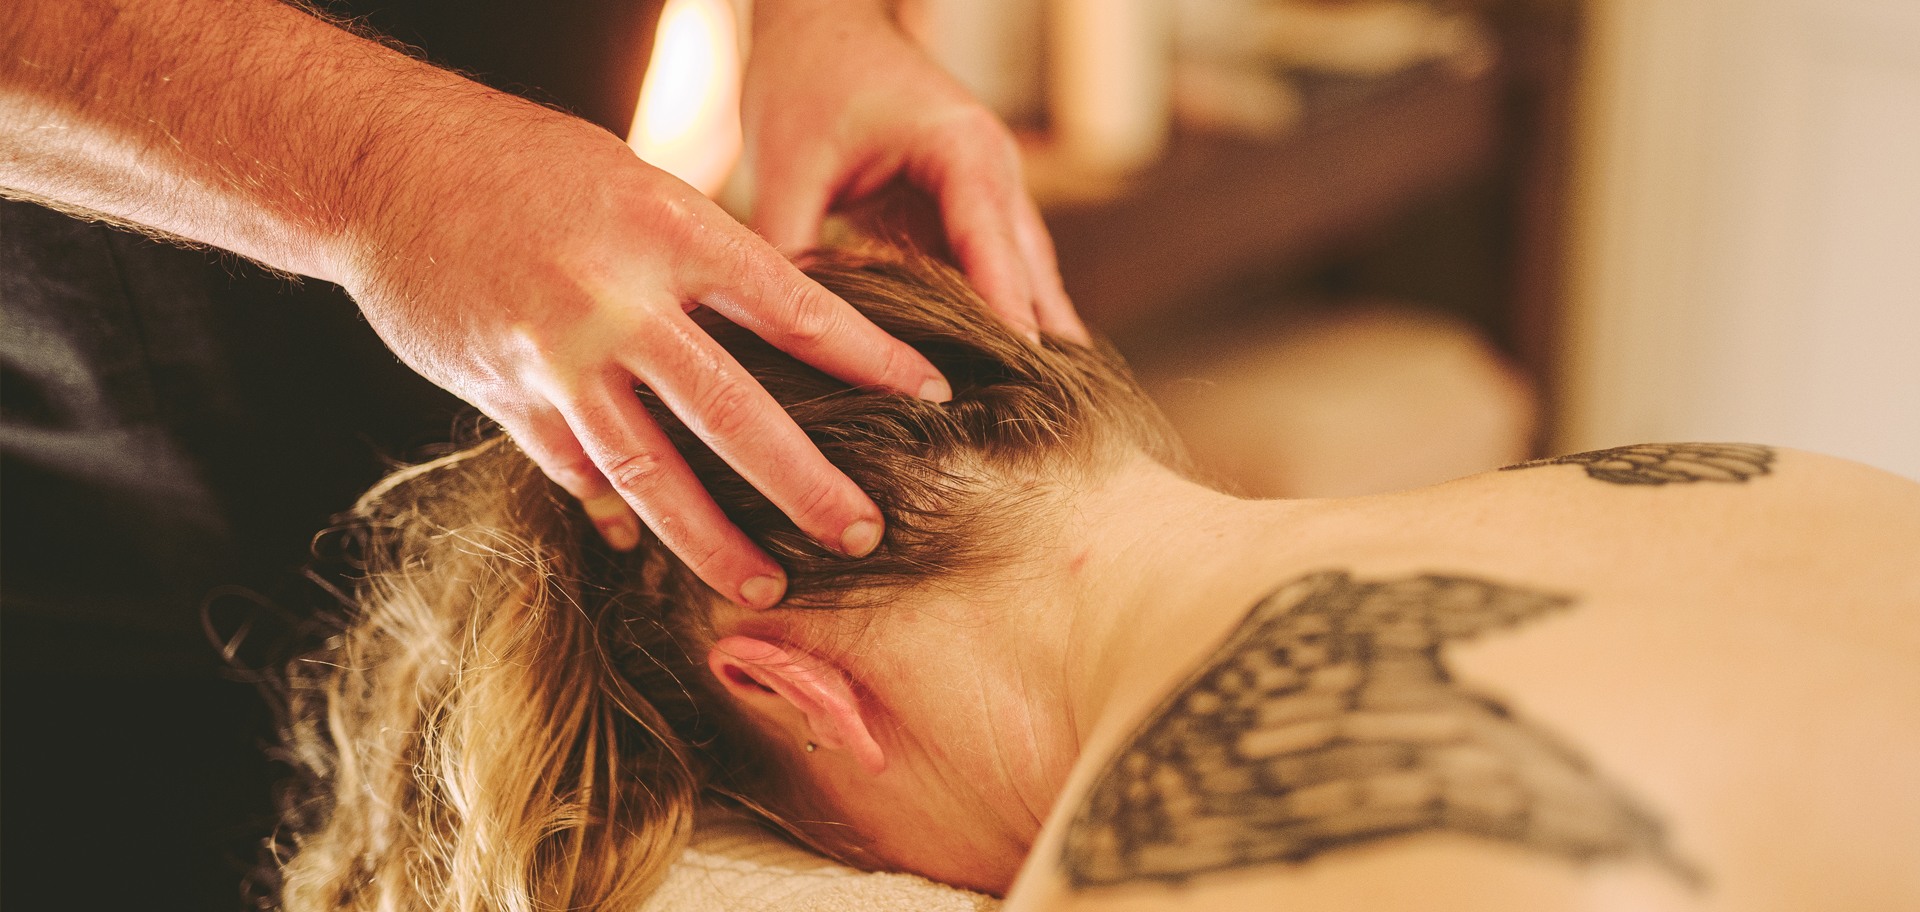 Tony Dunne Bodywork Therapy Killarney massage client reviews